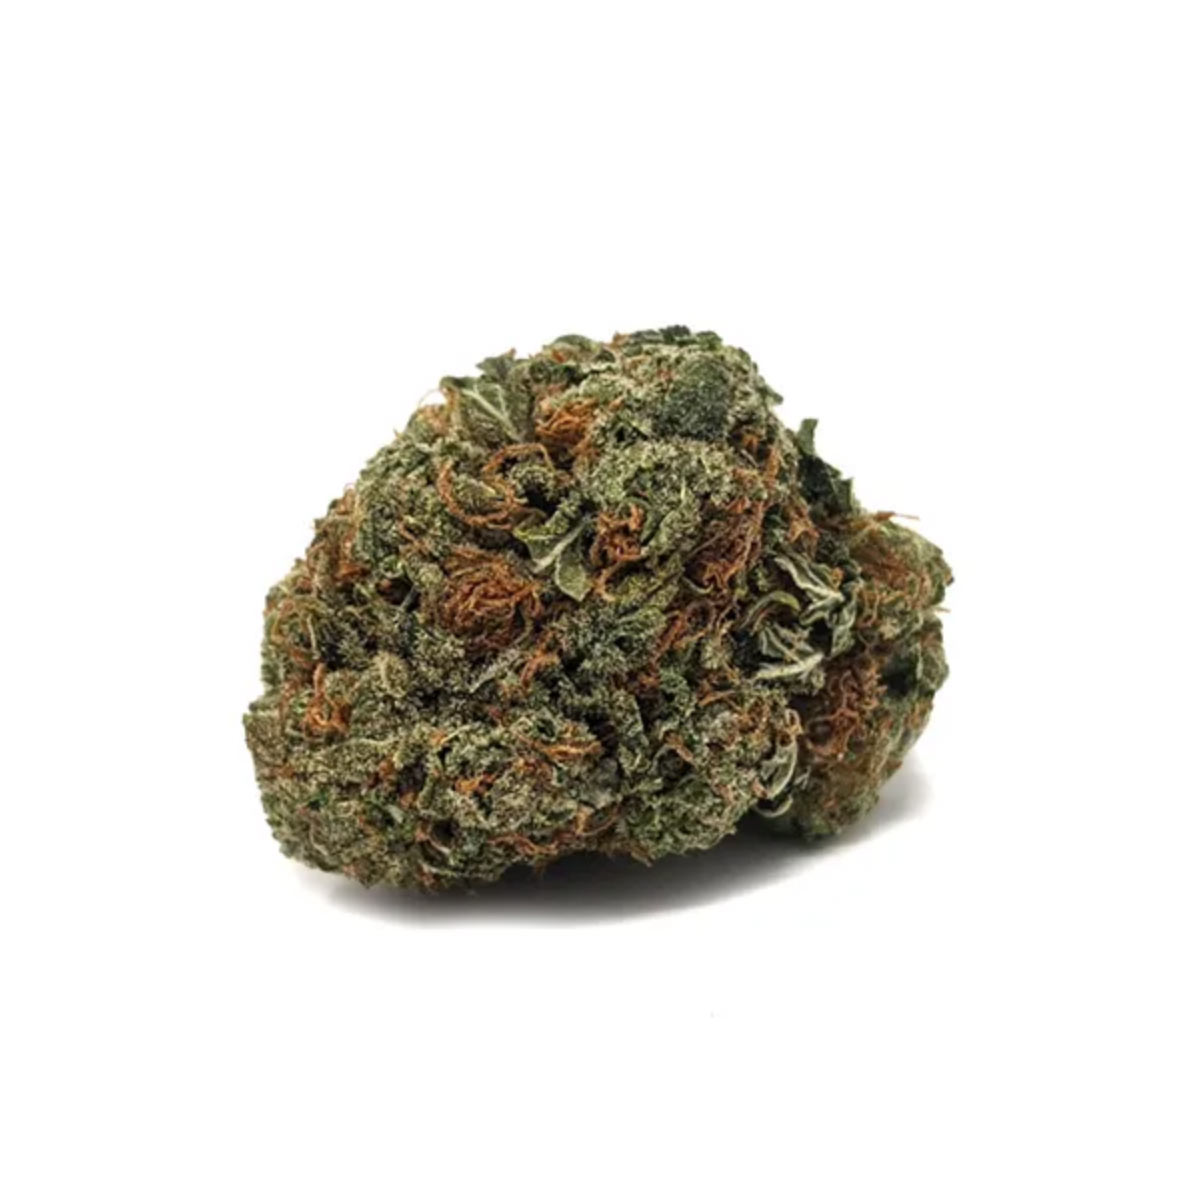 Alien OG hybrid marijuana strain from hotgrass.ca